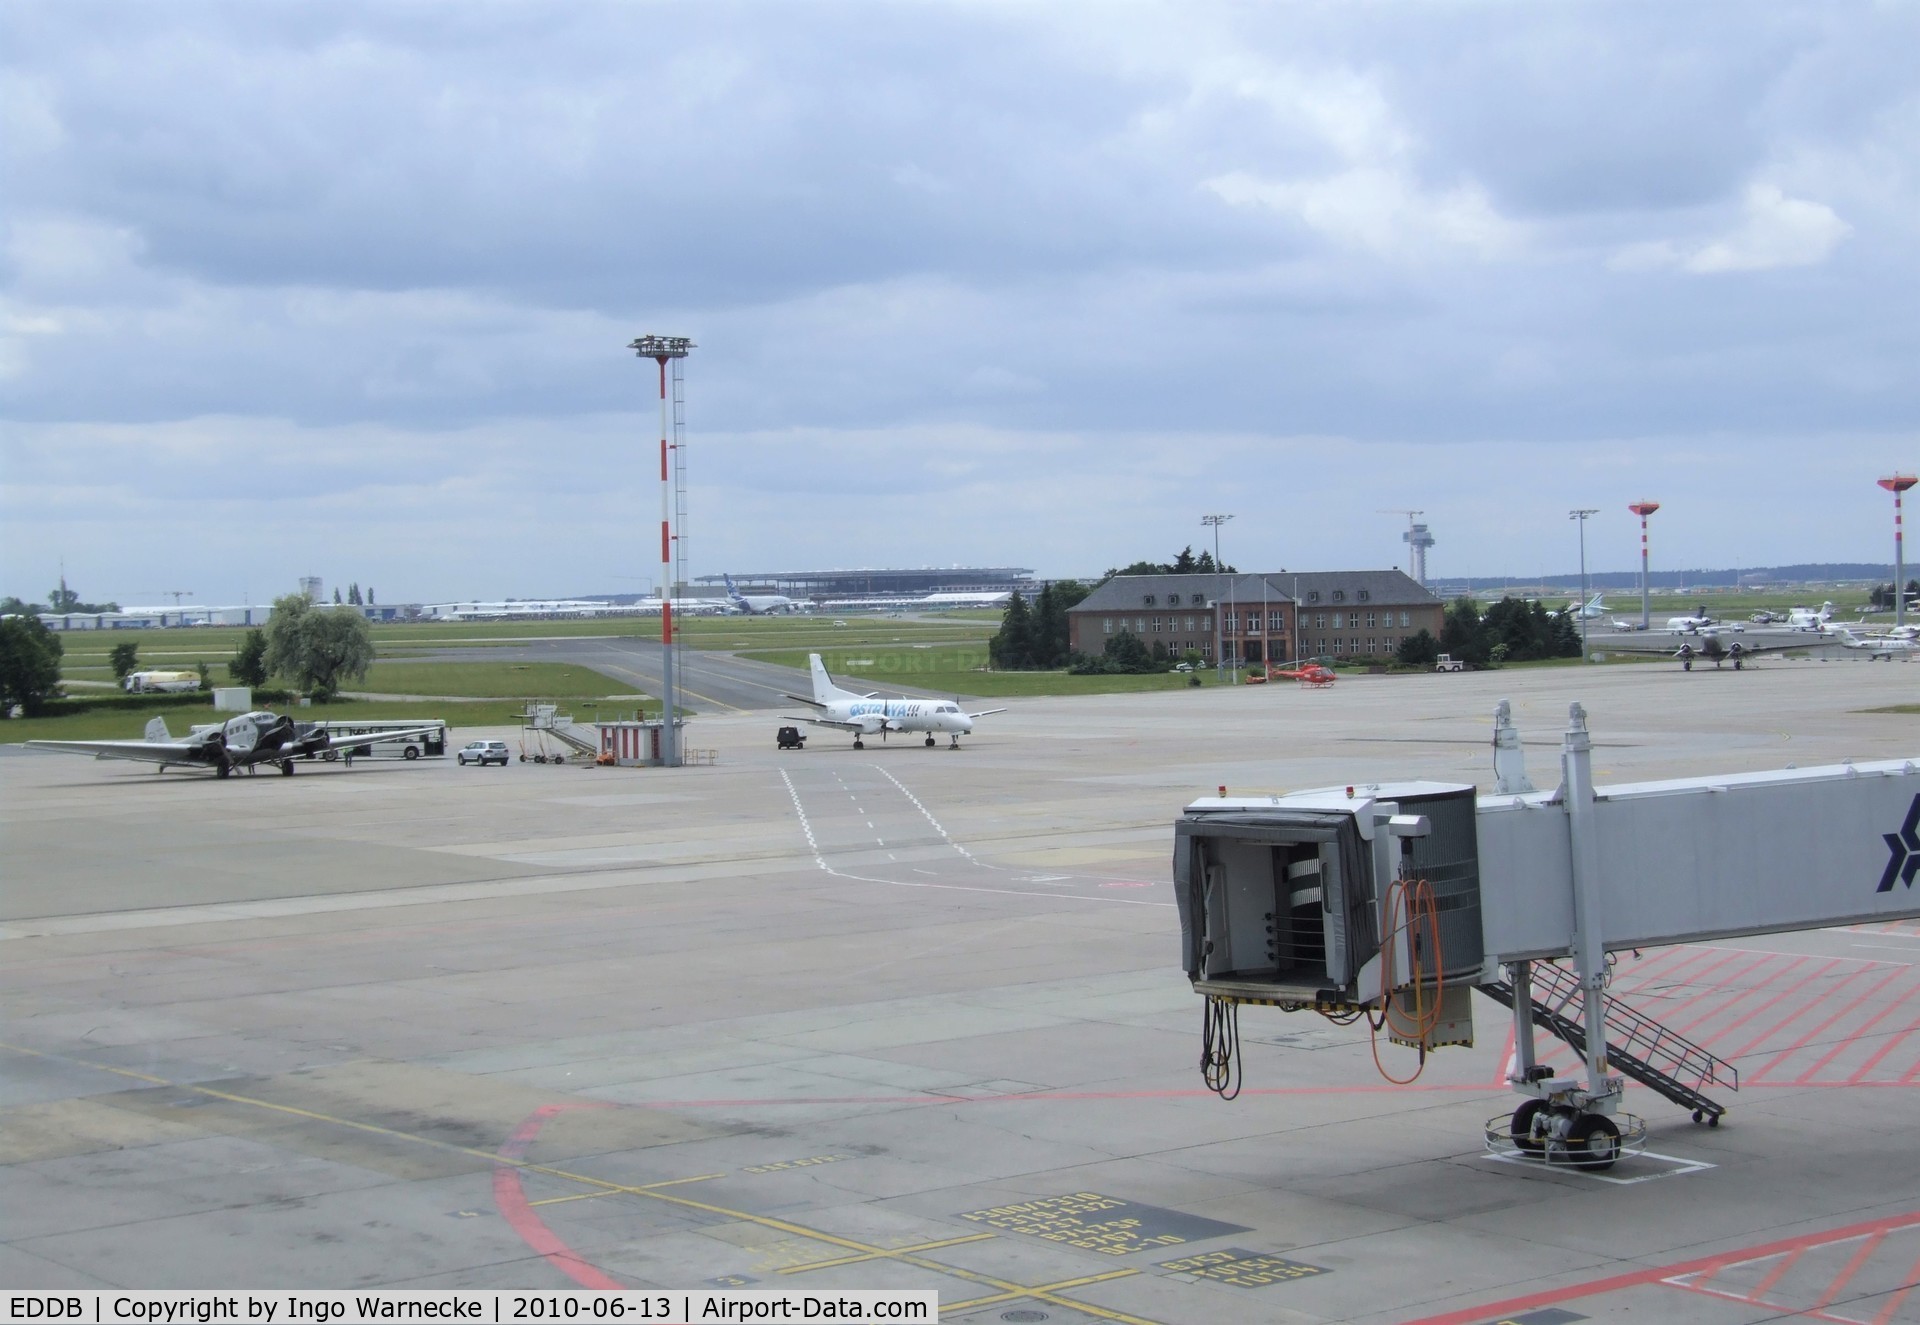 Berlin Brandenburg International Airport, Berlin Germany (EDDB) - looking at the apron at Schönefeld airport